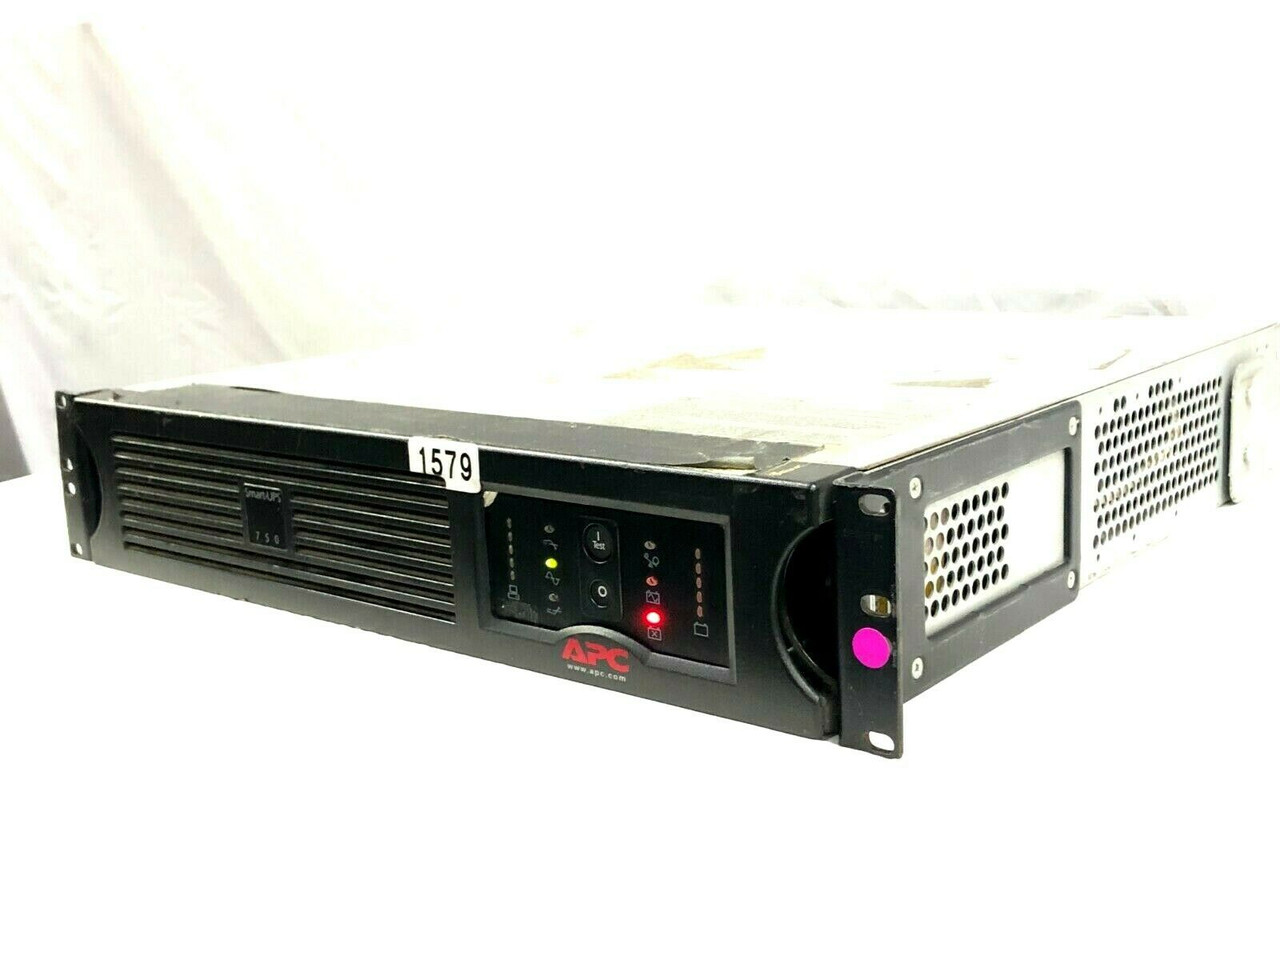 UPS 750 APC Smart Power Supply (One) -1579 - True Heart Sound